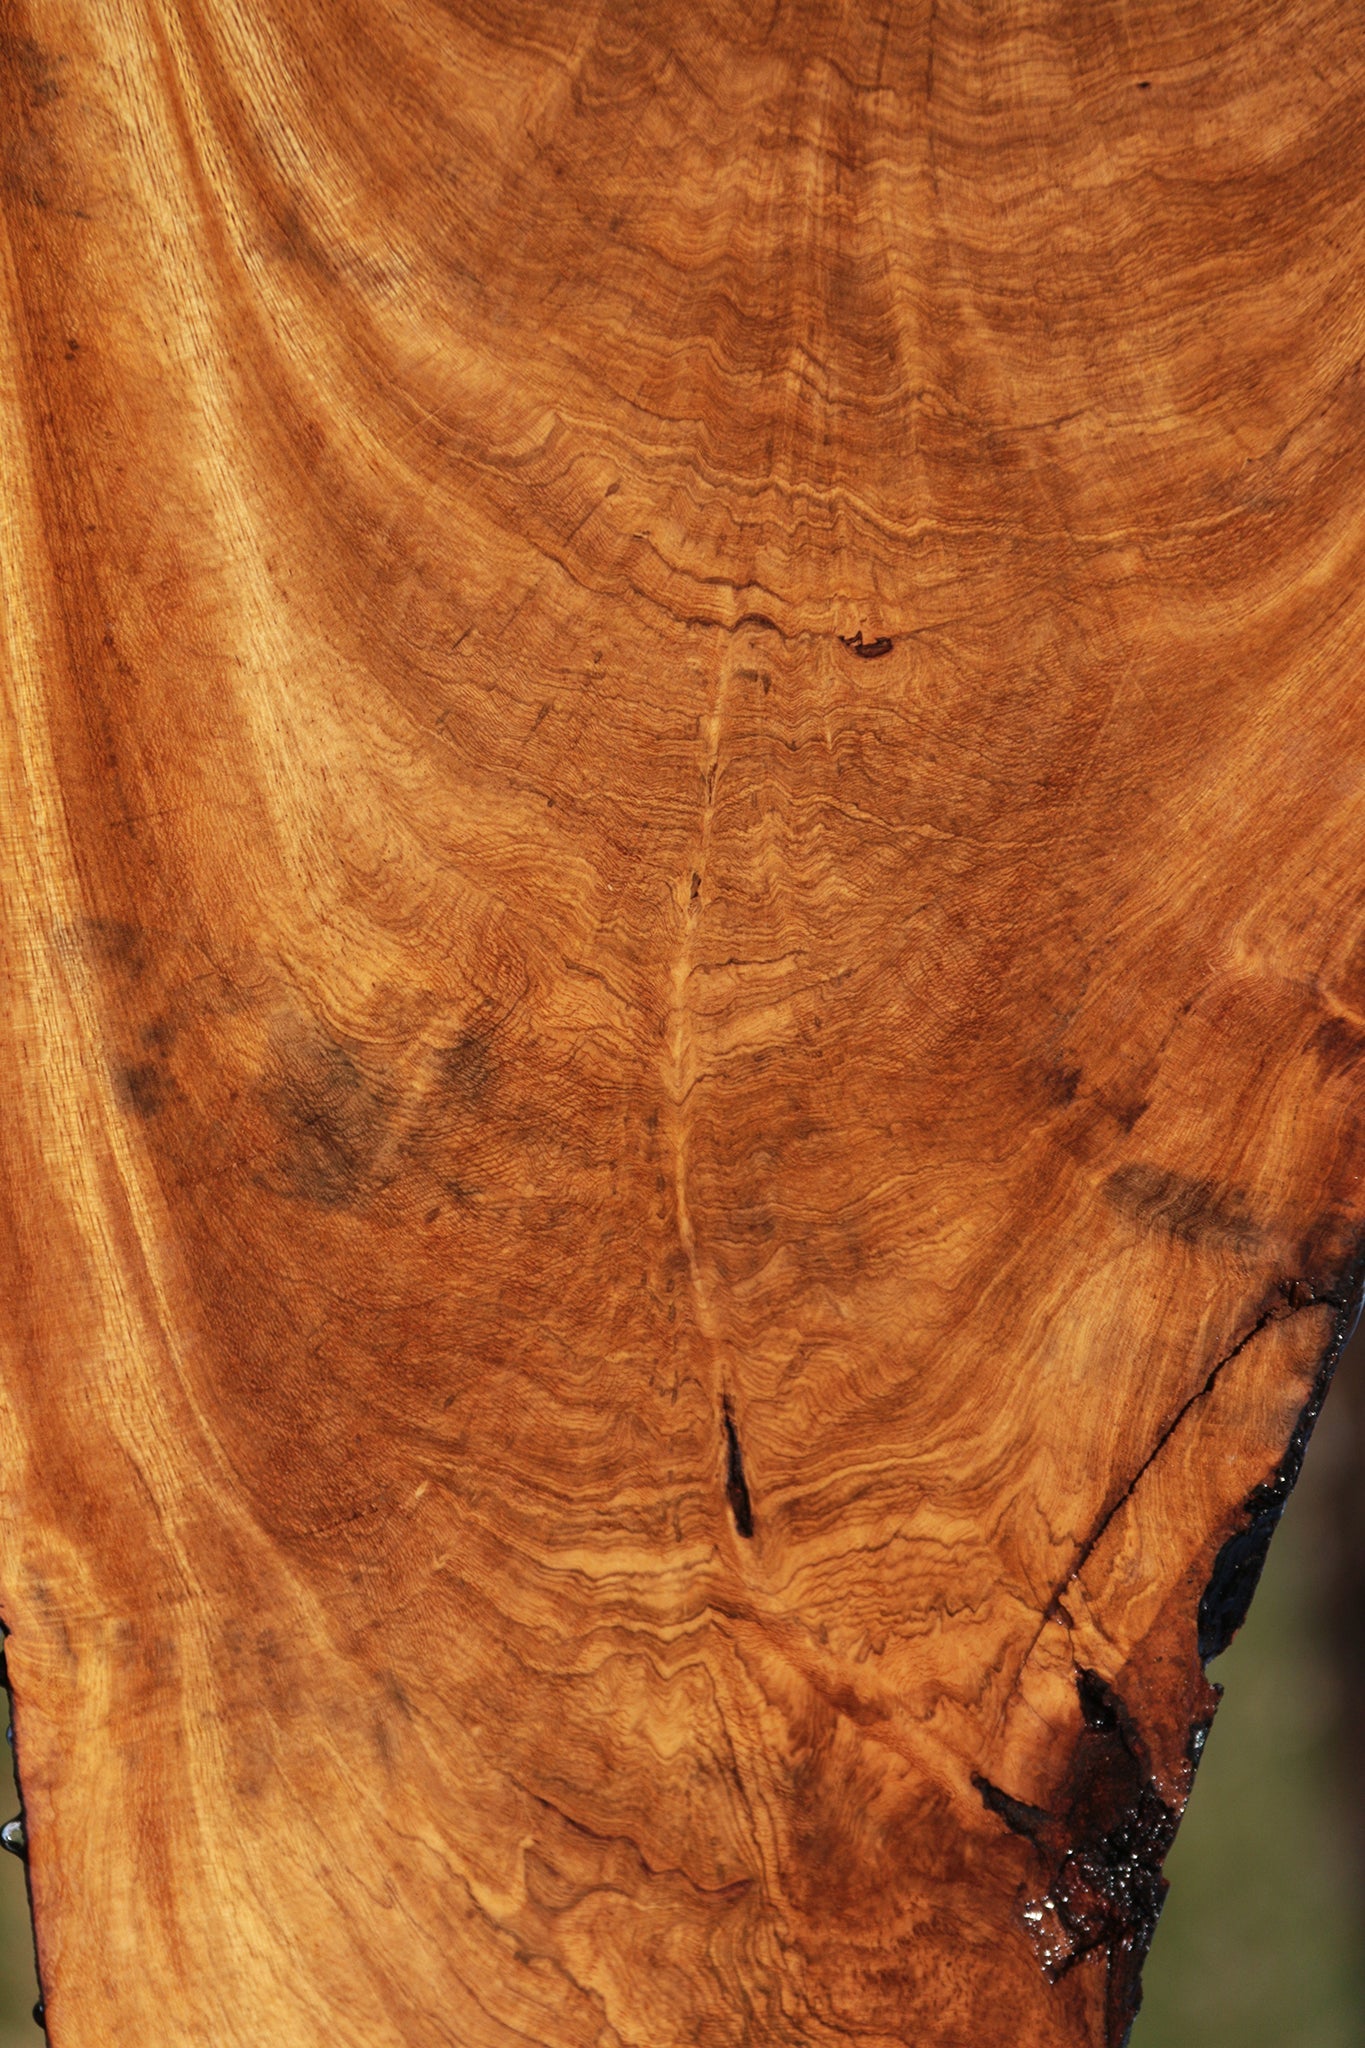 Extra Fancy Figured Crotchwood Cerejeira Live Edge Lumber